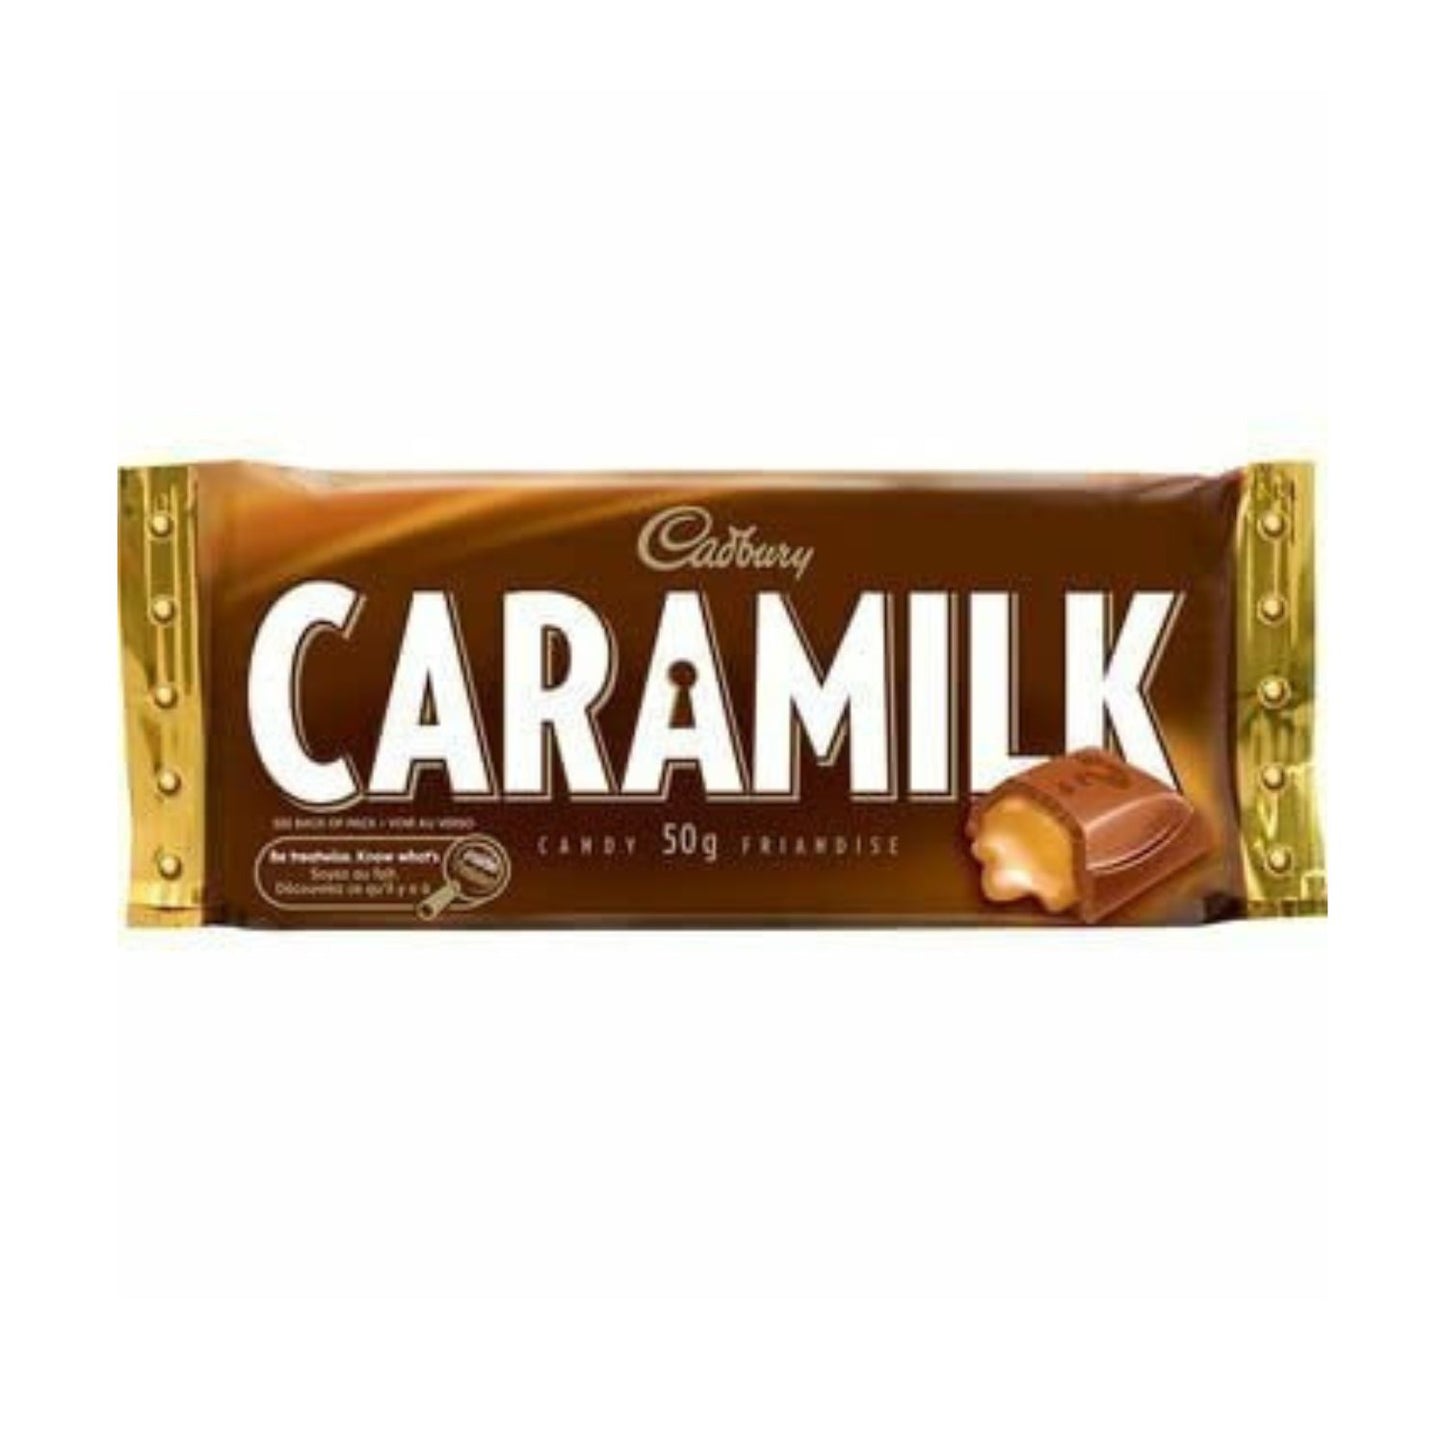 Cadbury Caramilk 12 bars 50g/1.76oz (Shipped from Canada)